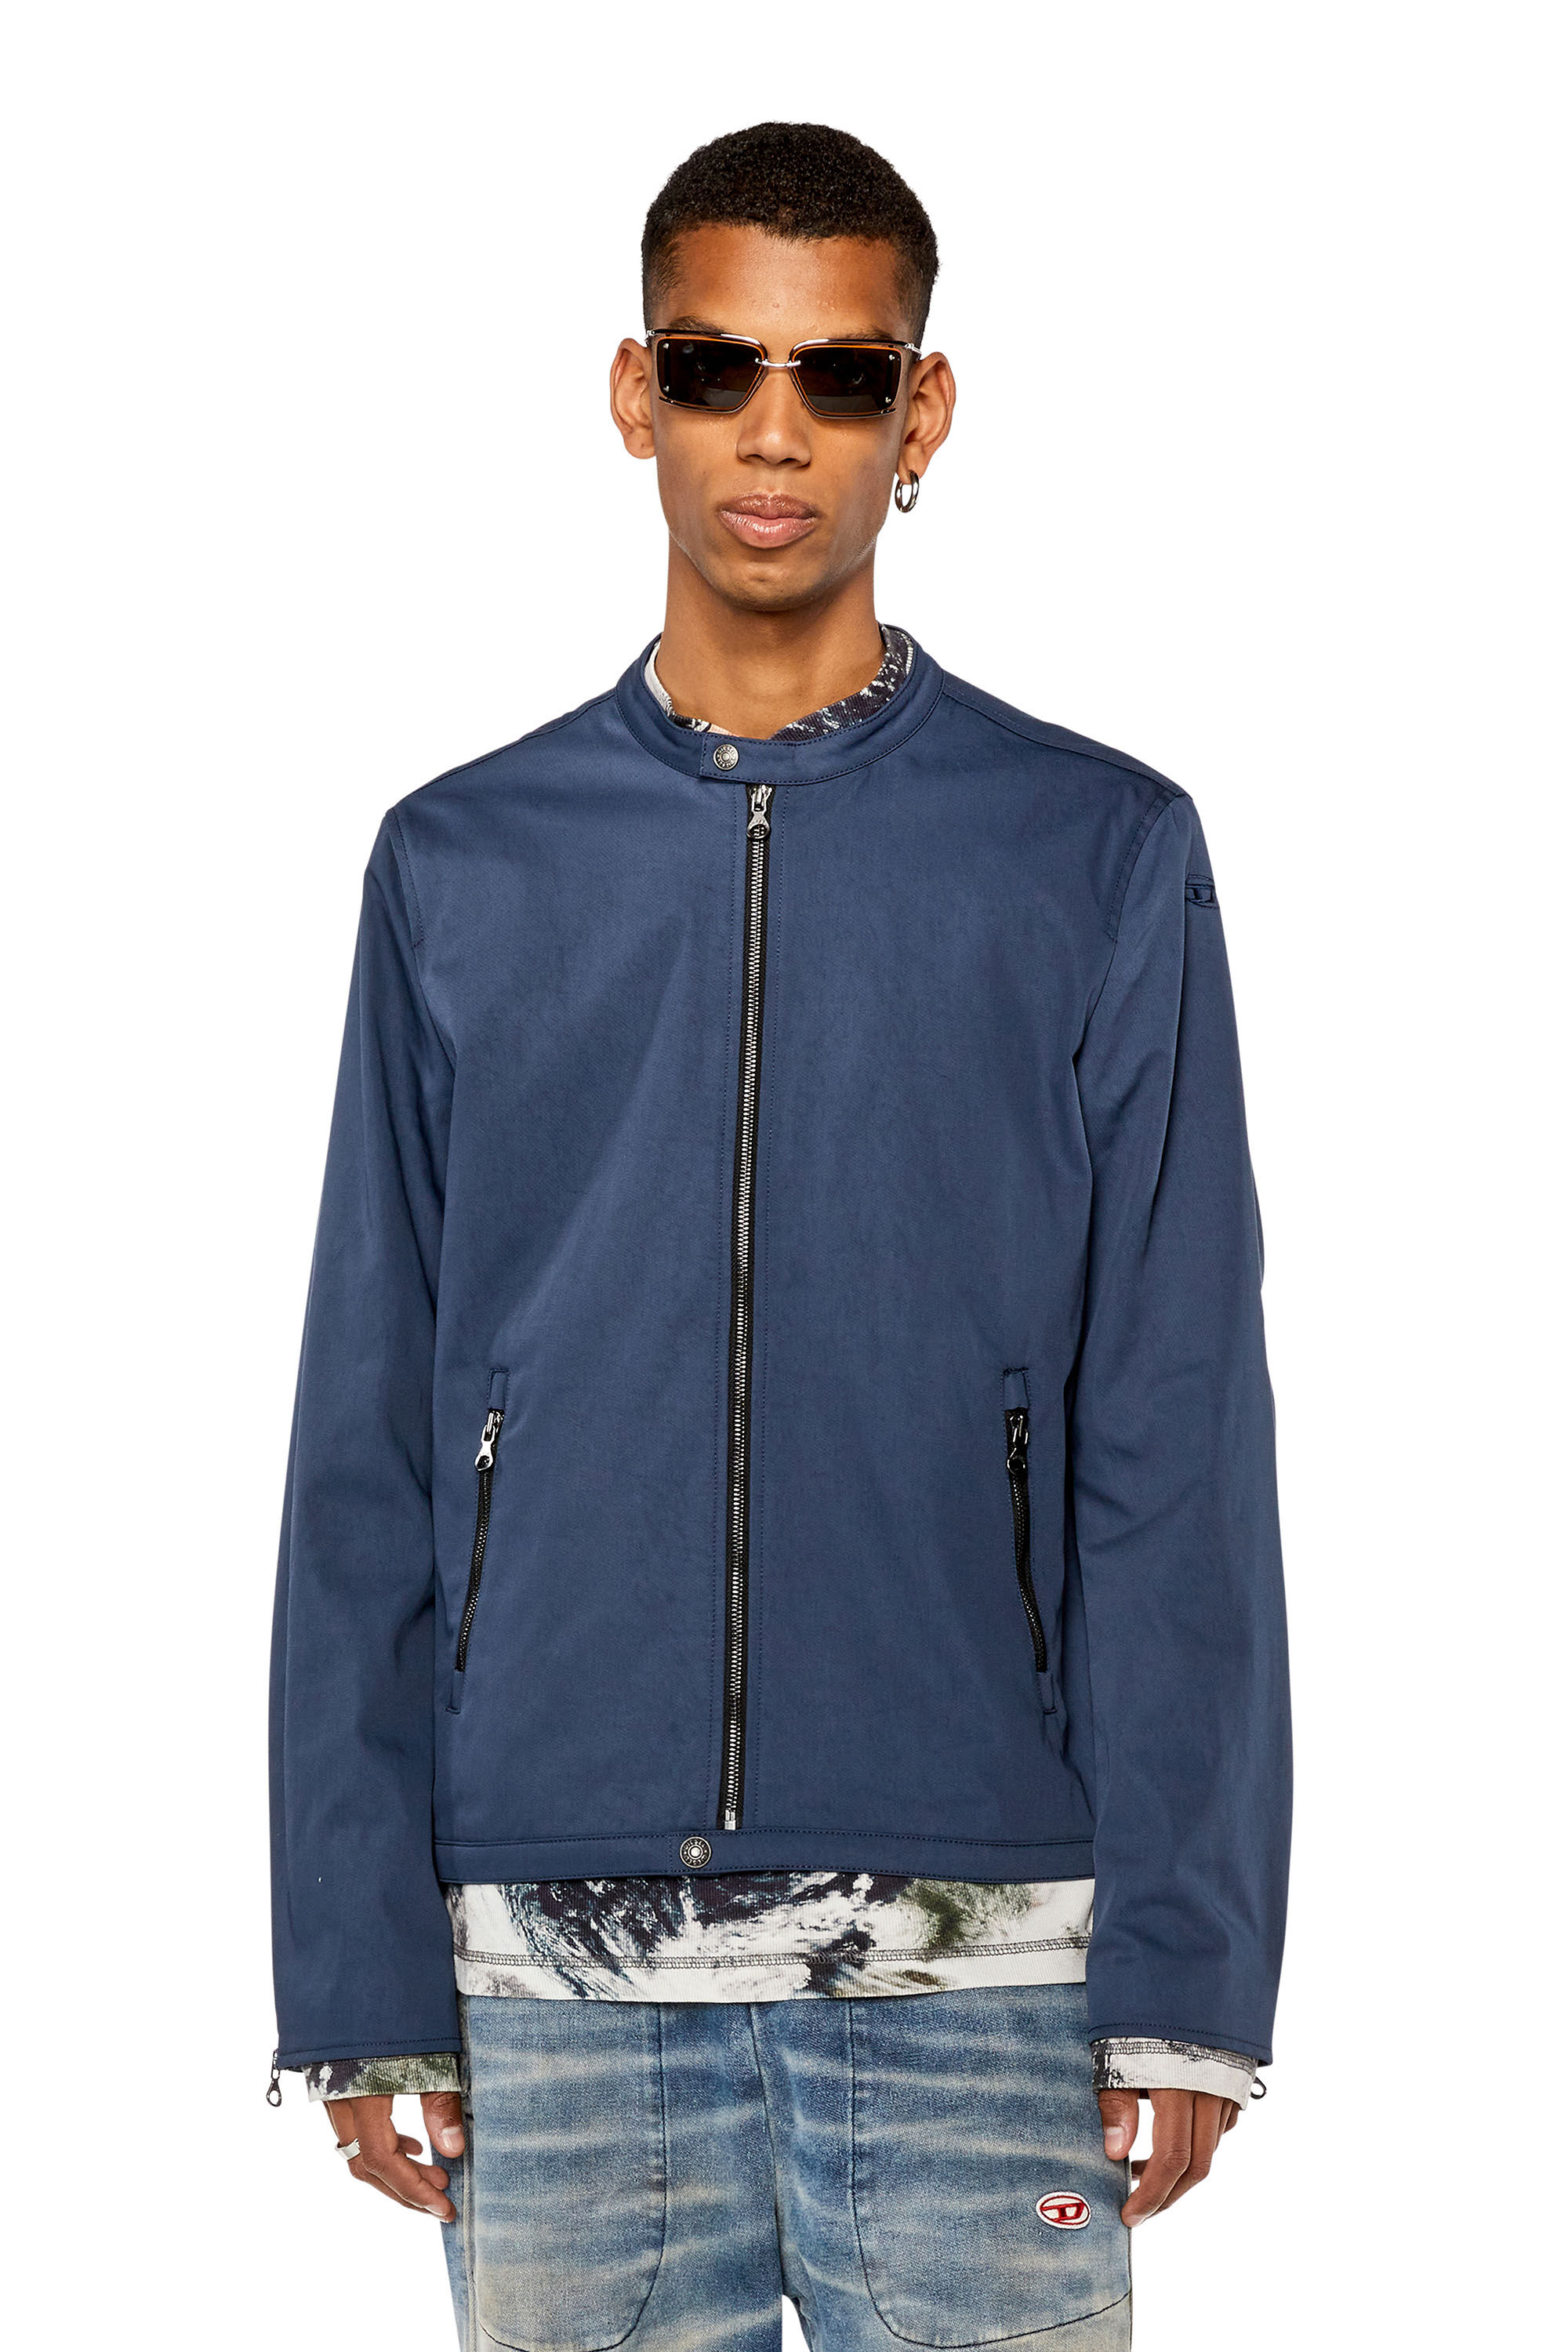 Diesel - J-GLORY-NW, Man Biker jacket in cotton-touch nylon in Blue - Image 3